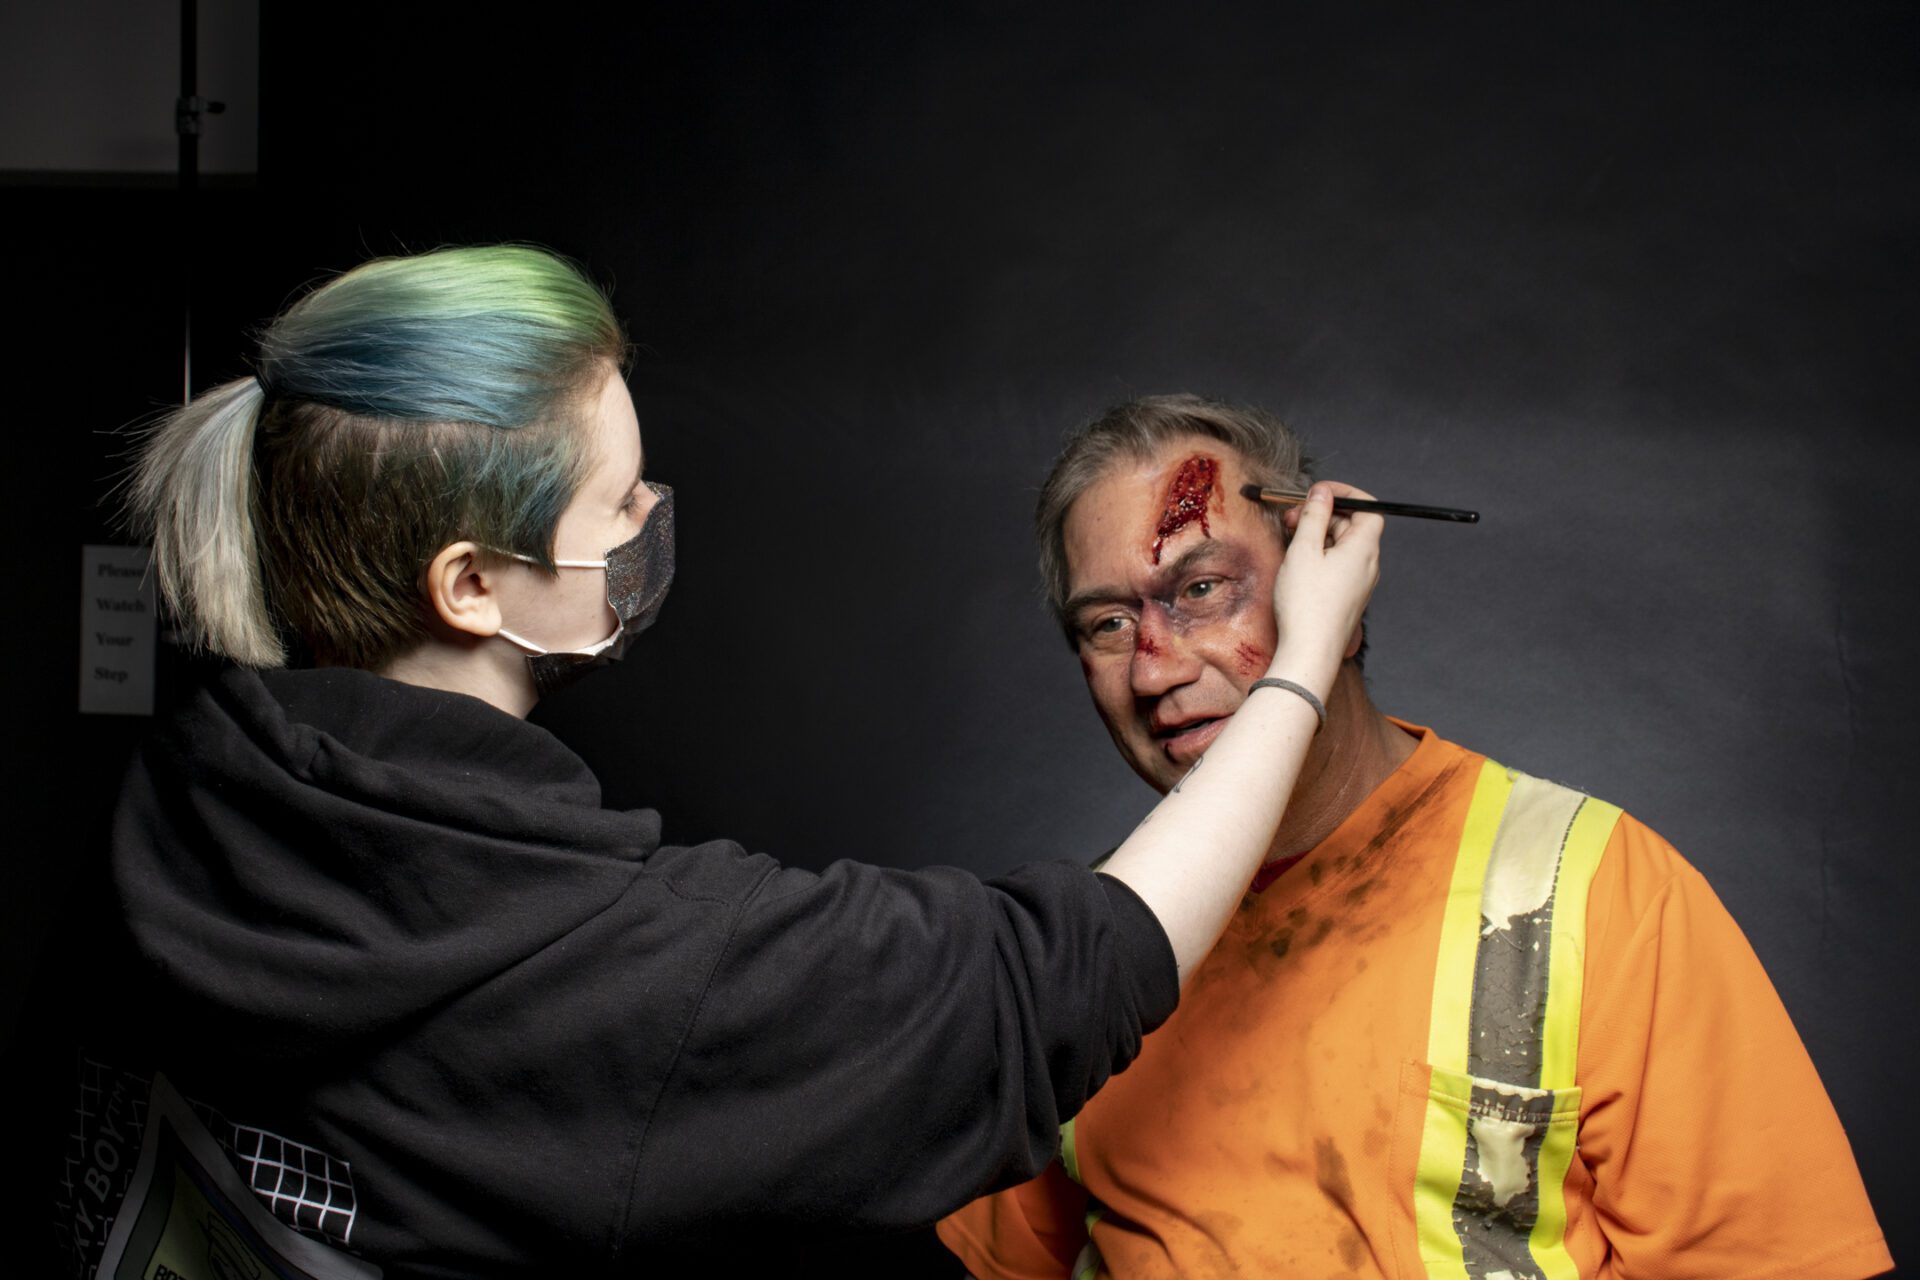 A CMU student adding makeup to a man during a class